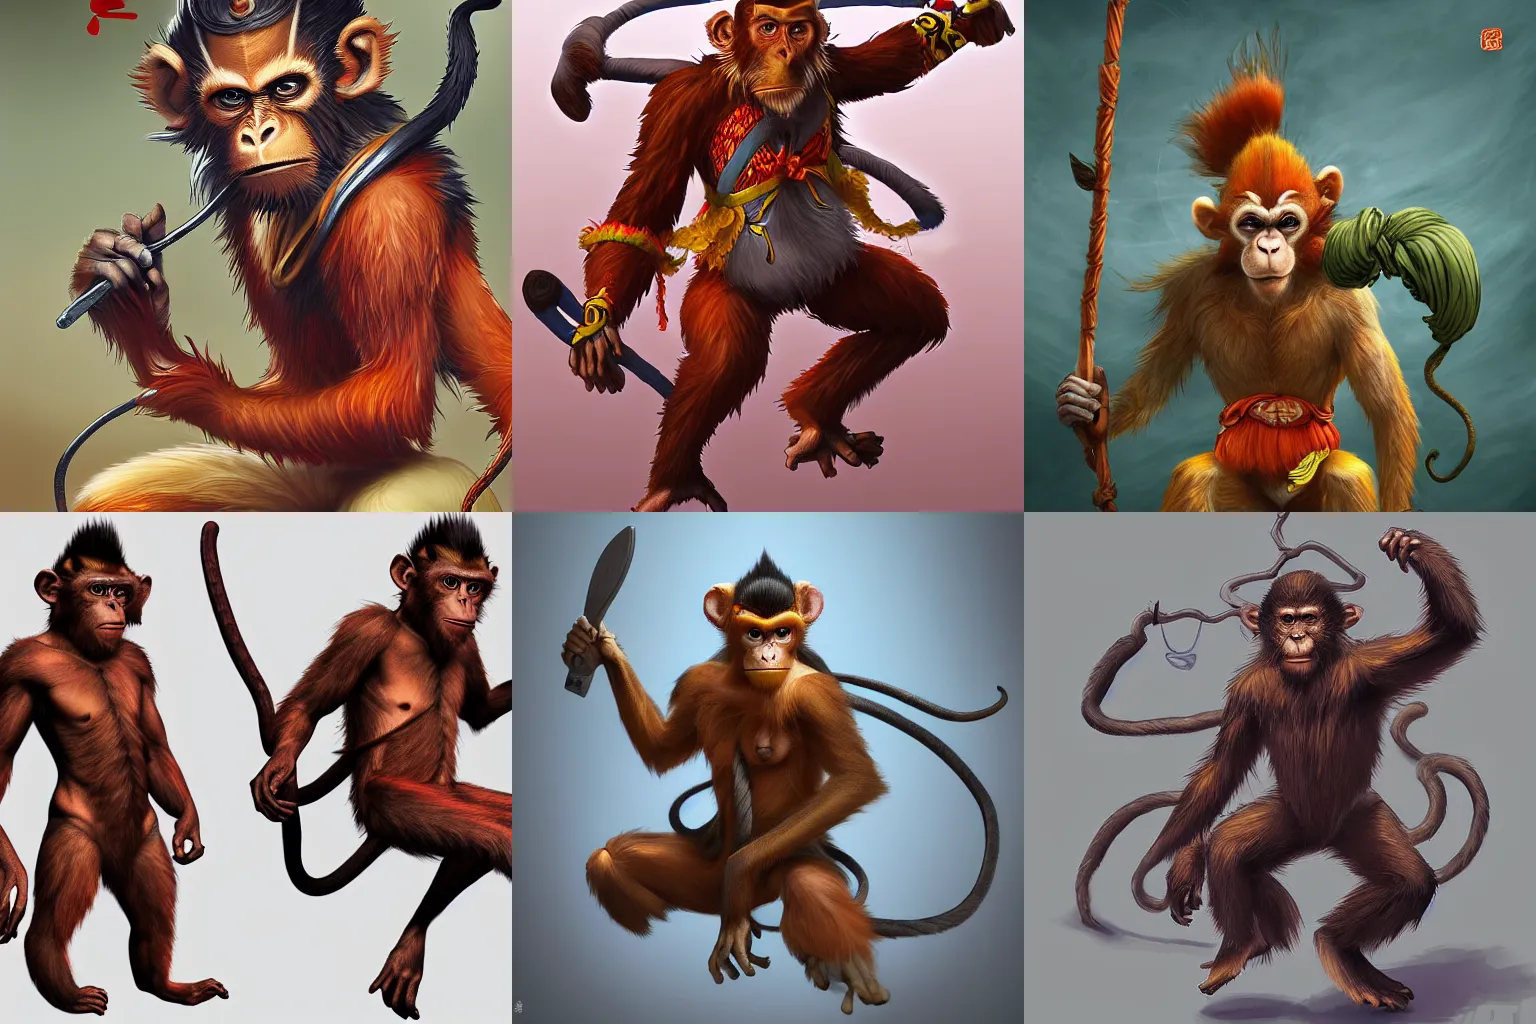 Prompt: tang mo, hadozee, apeling, monkey folk, beast folk, humanoid monkey fantasy race ,wukong, monkey king, featured on artstation